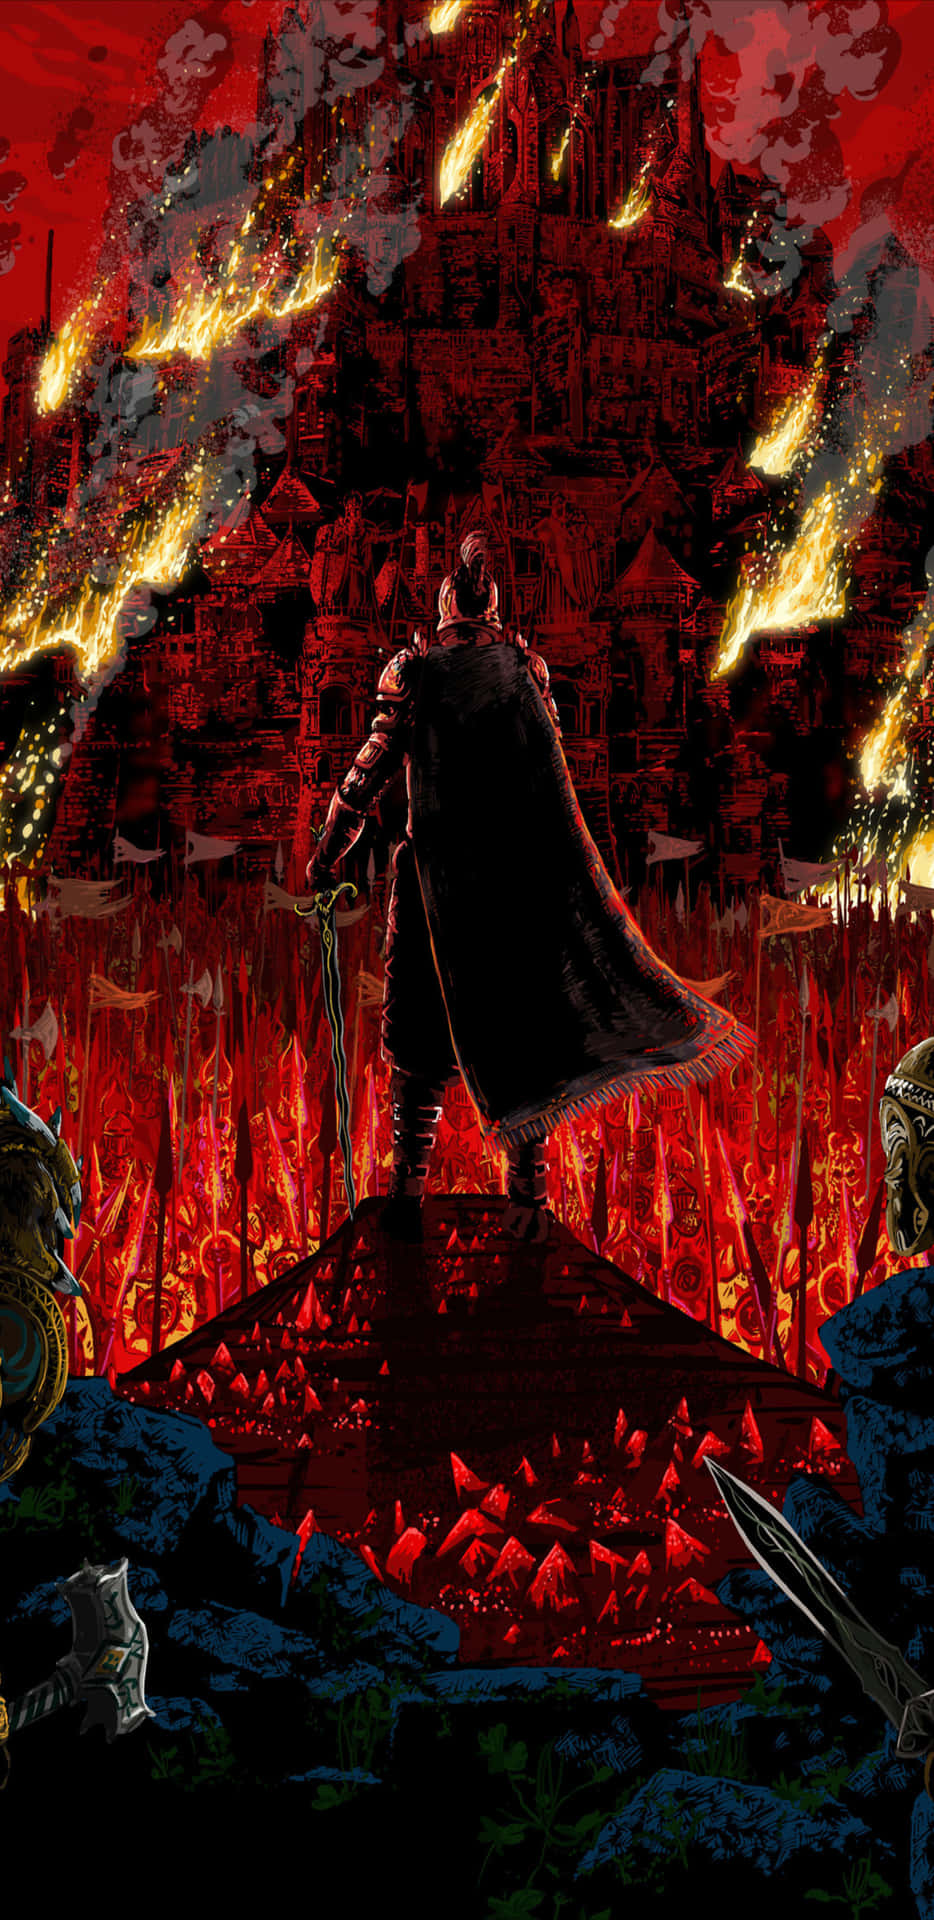 Pixel 3xl For Honor Resistance War Burning Castle Background